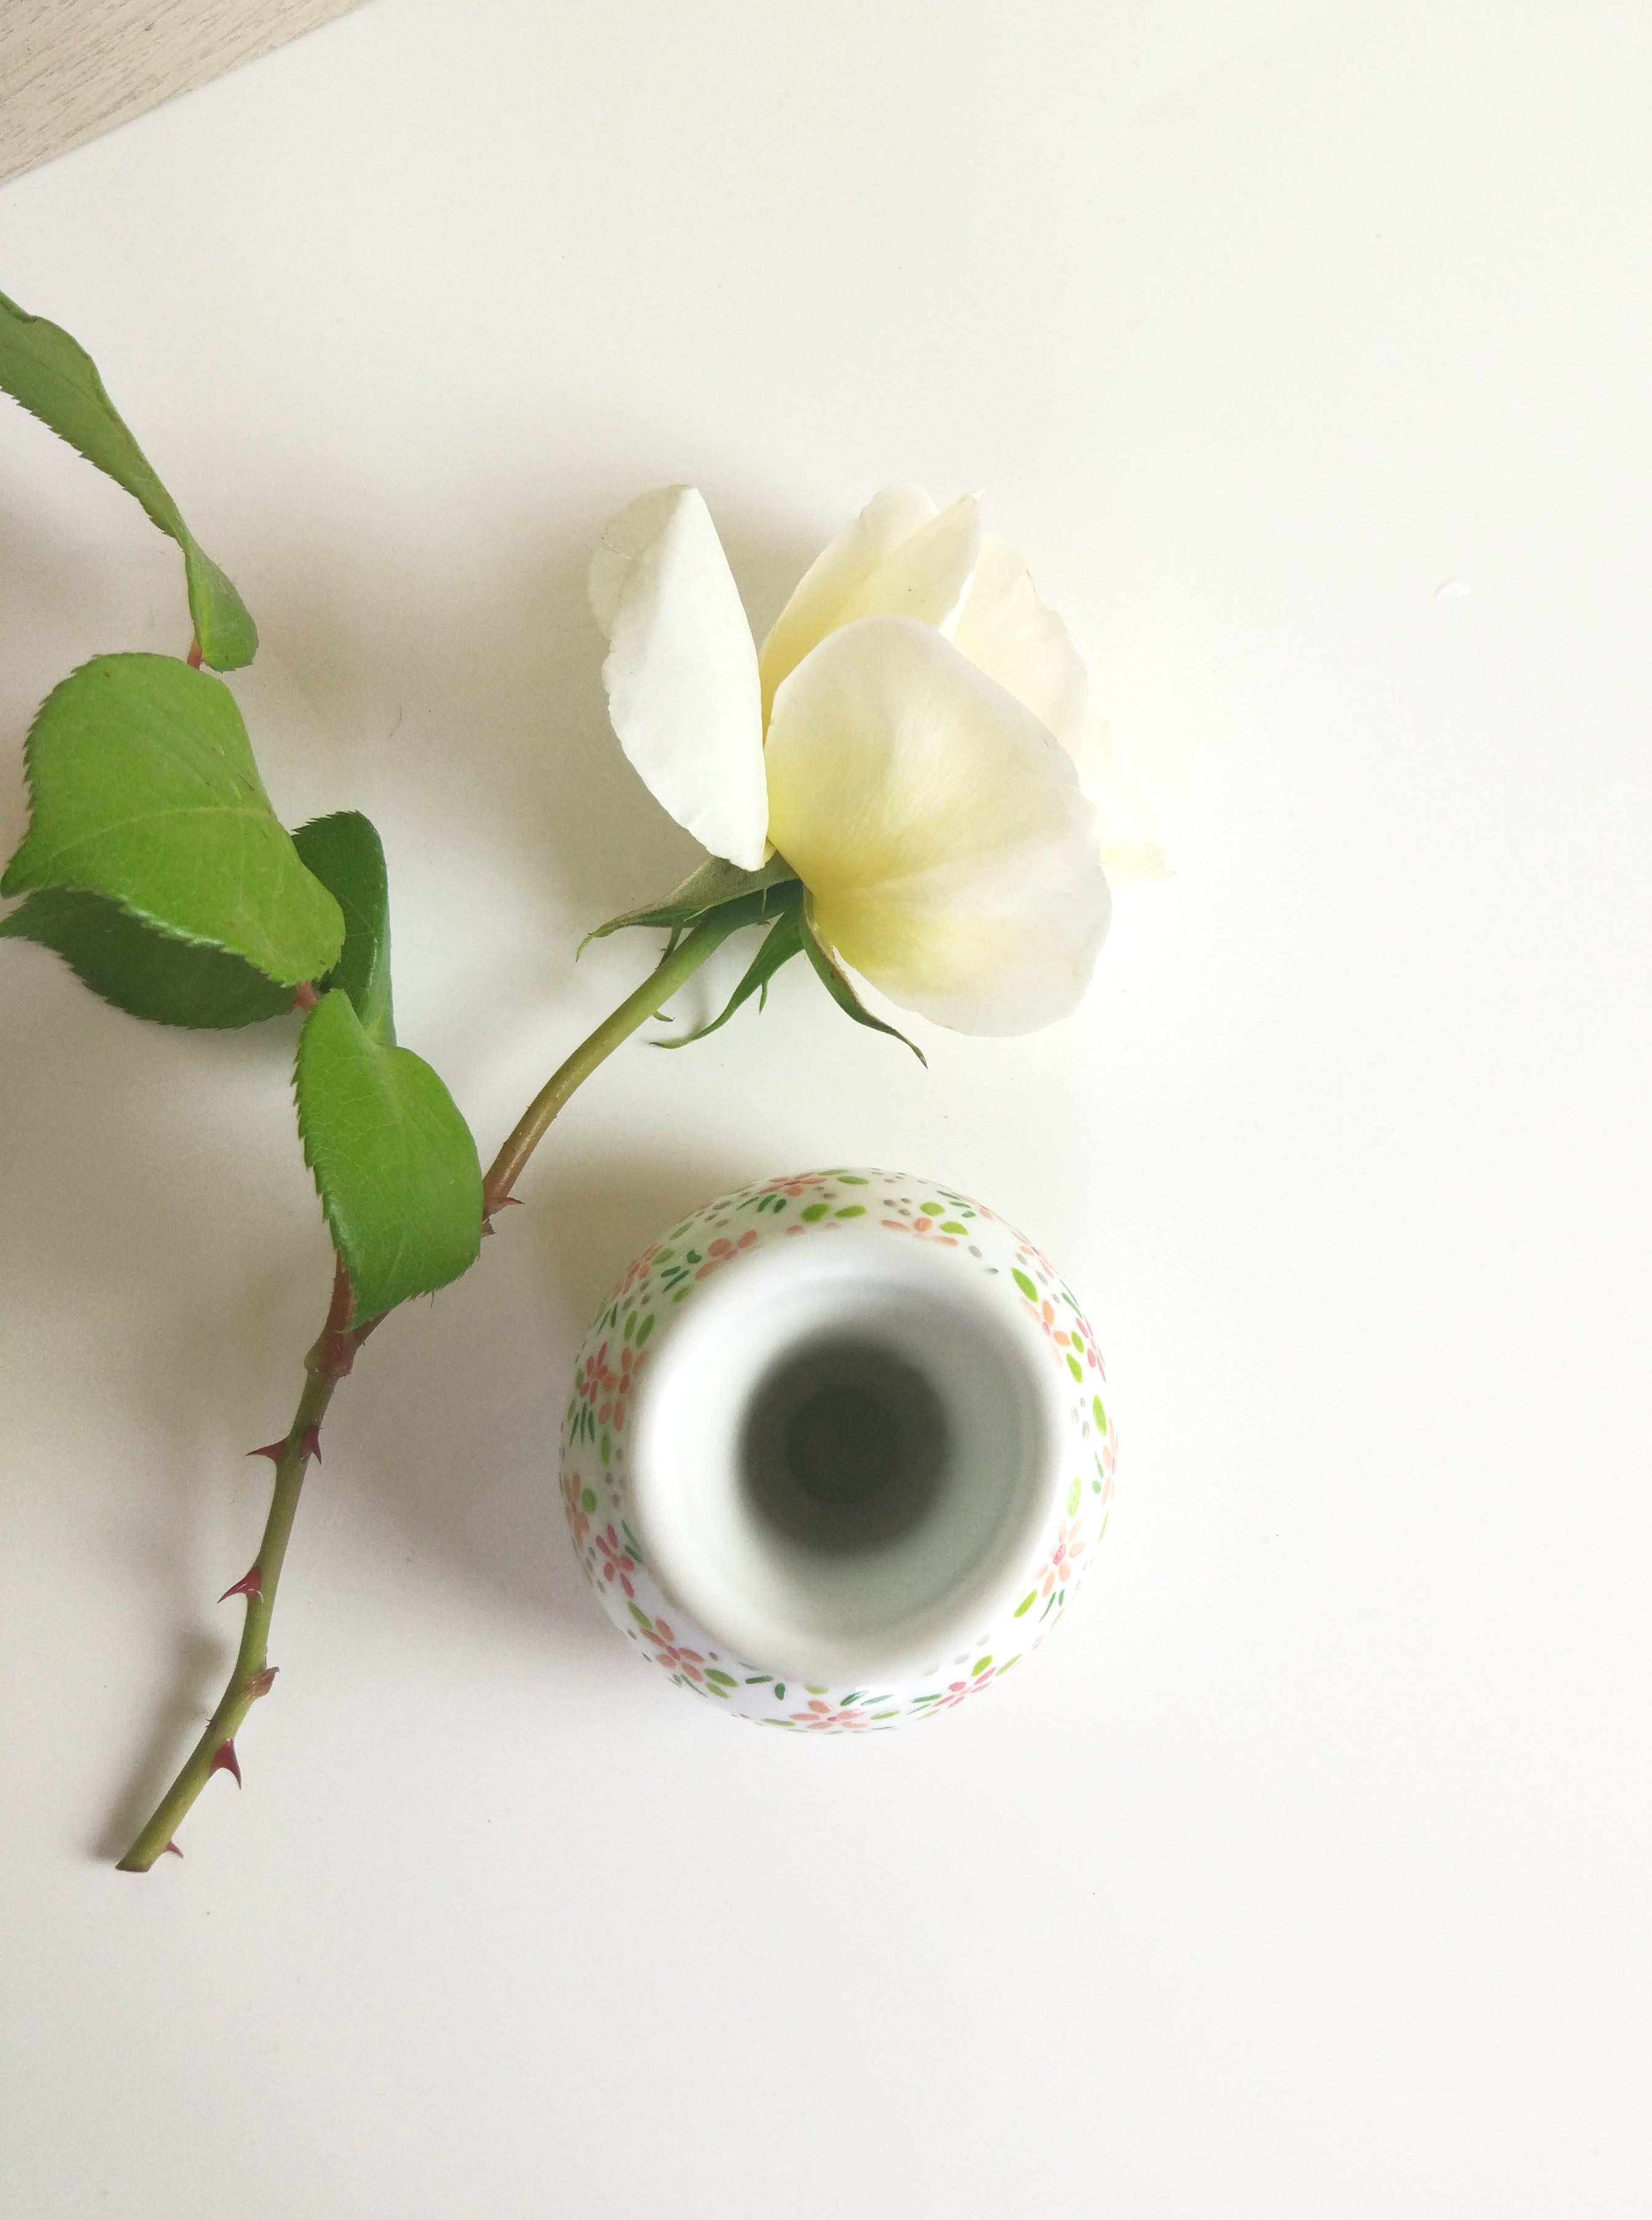 Hand Painted Single Flower Vase